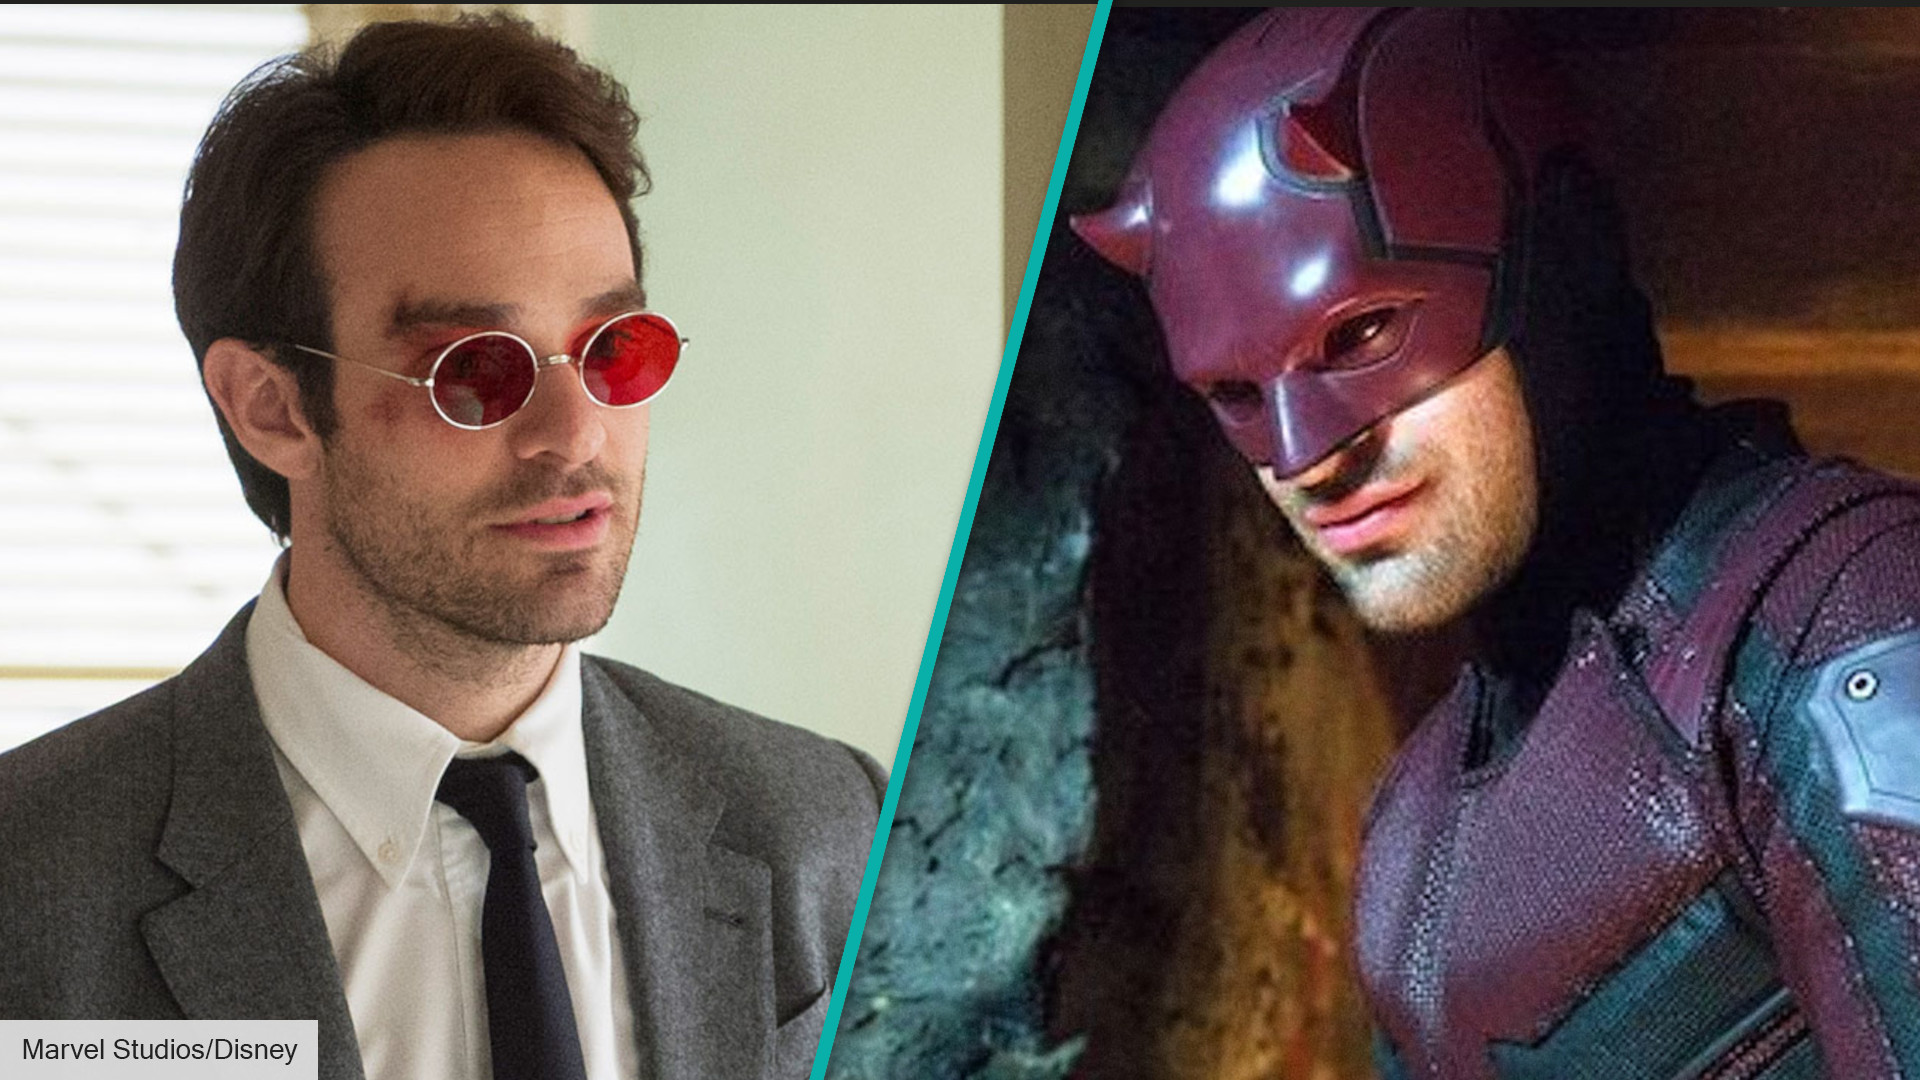 Charlie Cox would back Marvel’s PG version of Daredevil